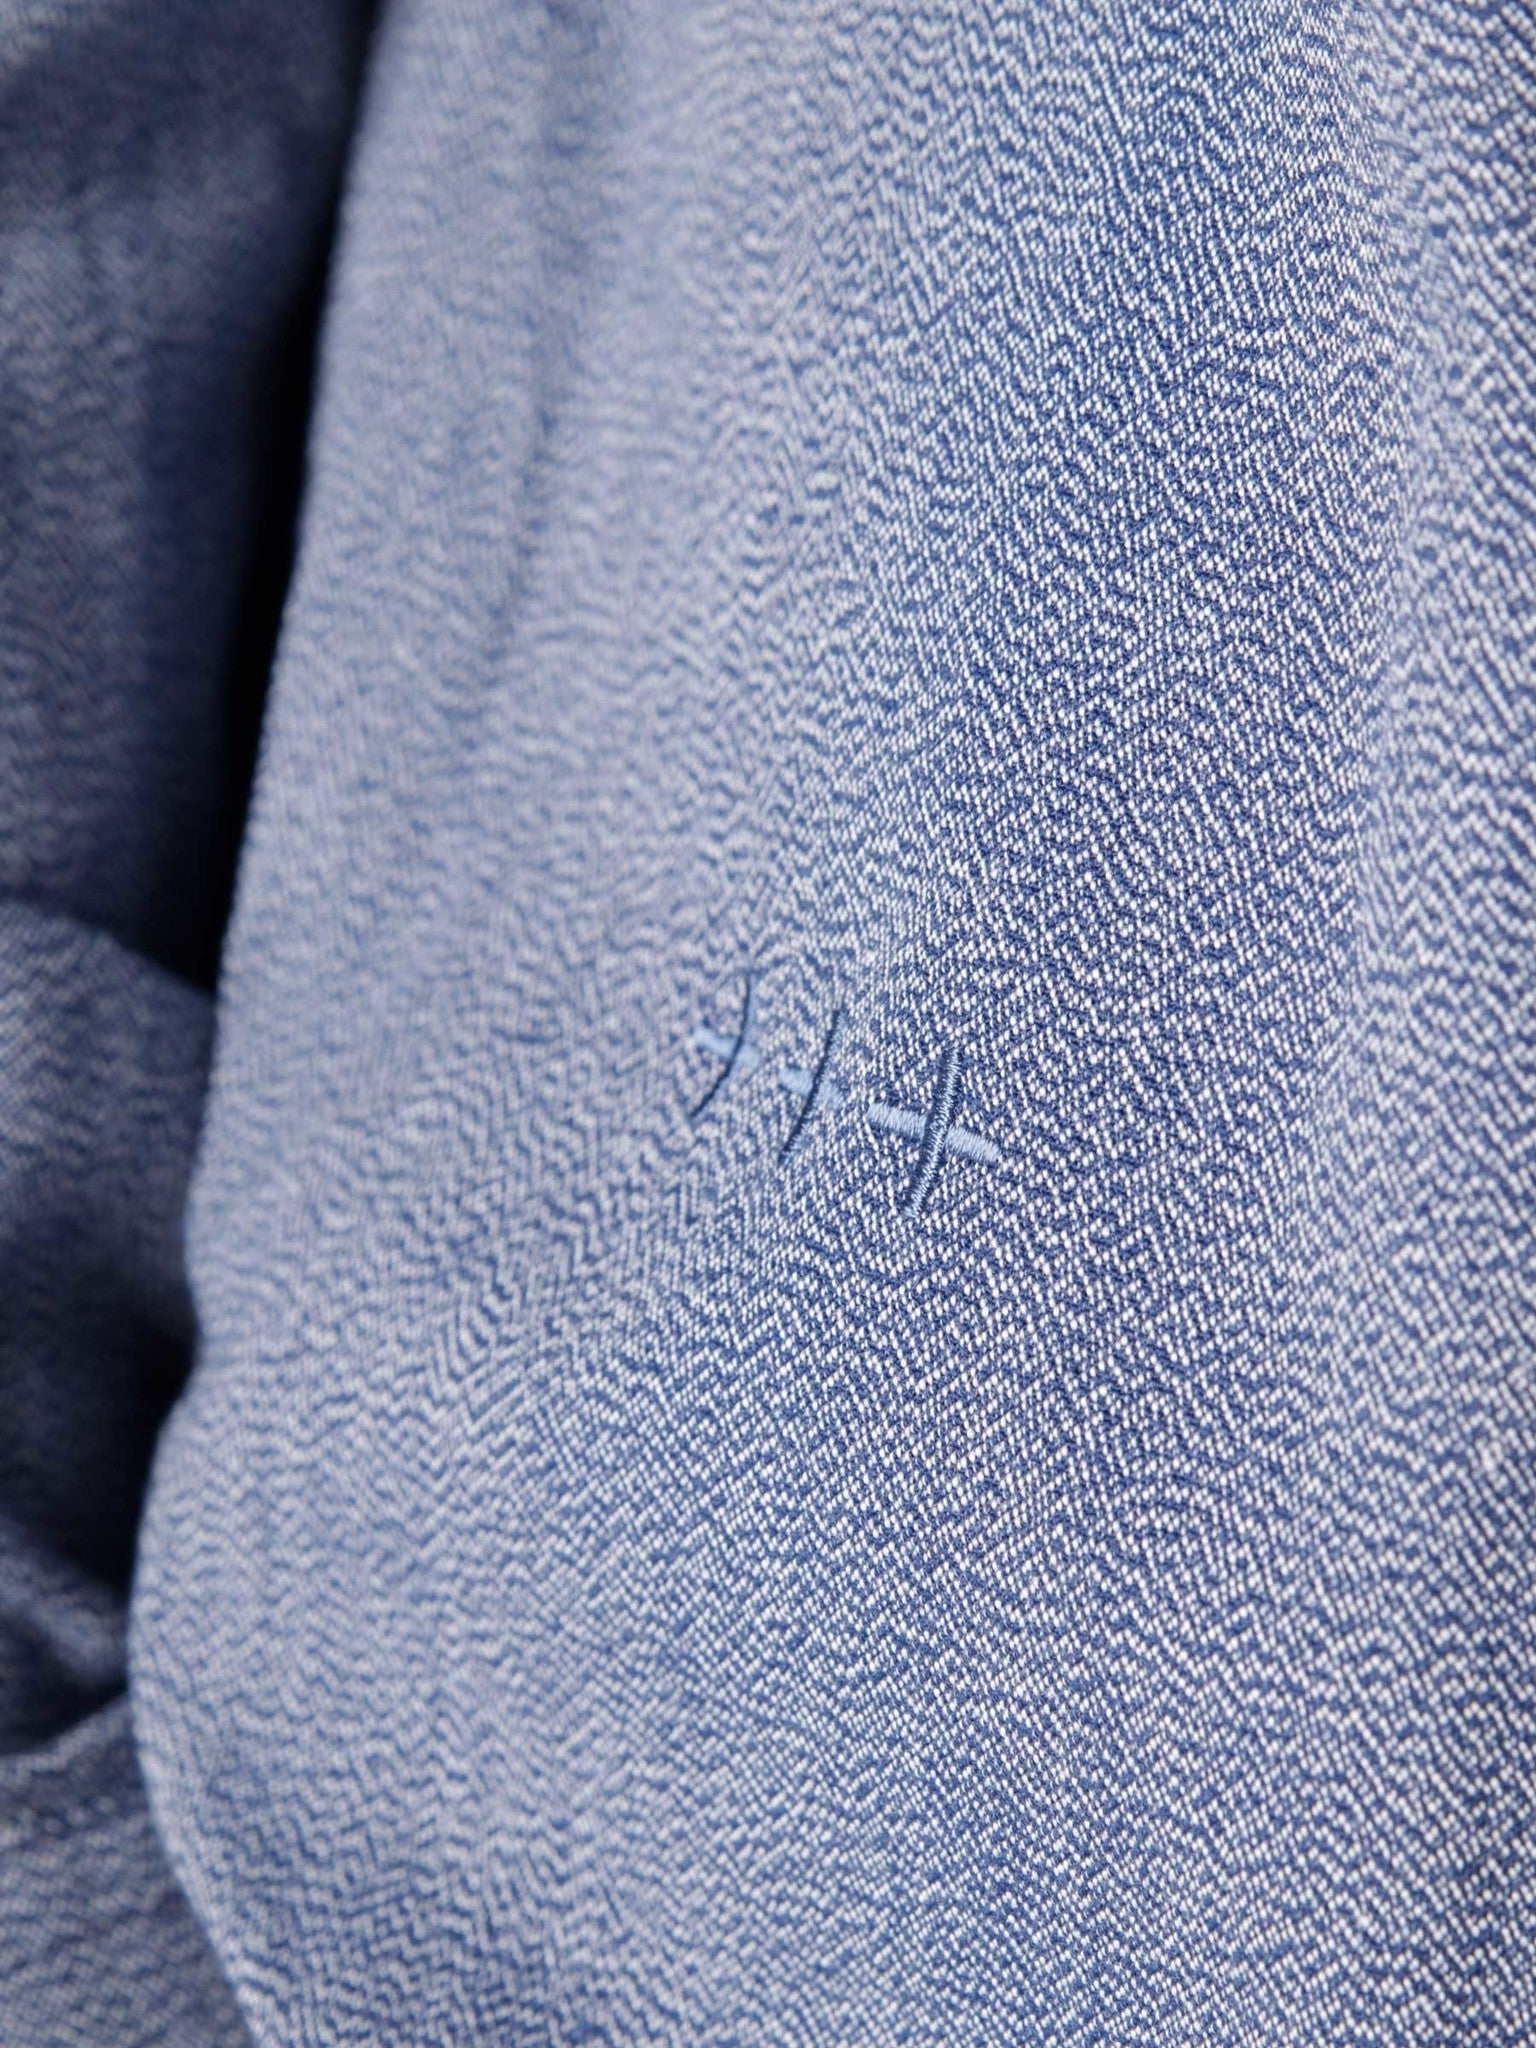 QB44 Stripe Shirt Navy Blue Textured